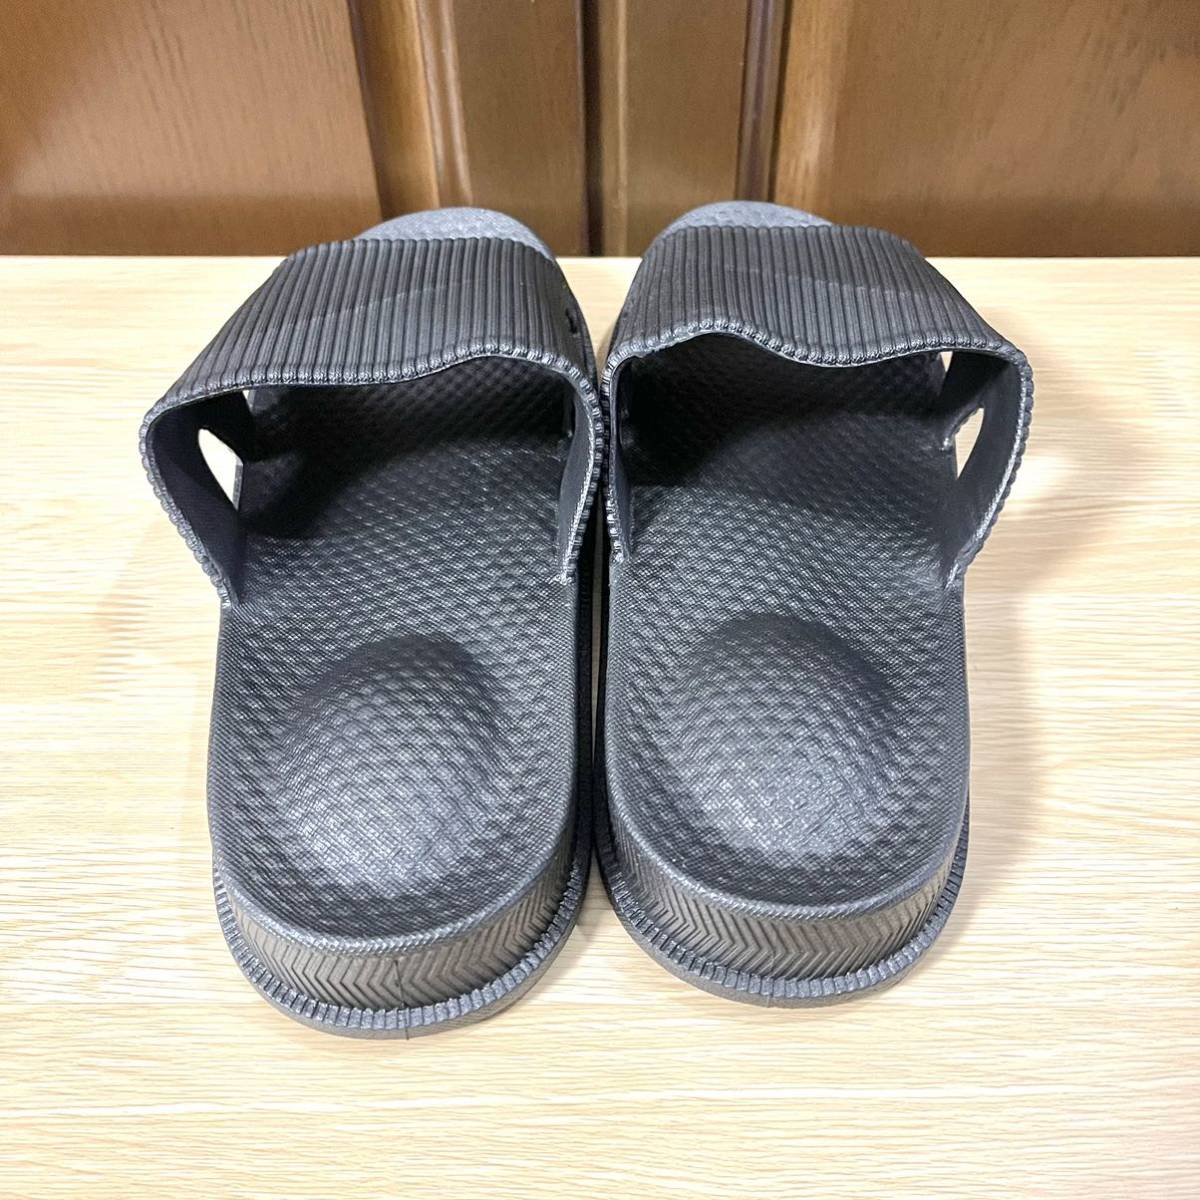  veranda sandals shower sandals veranda slippers slip prevention soft soundproofing deodorization black 26.5~27.0